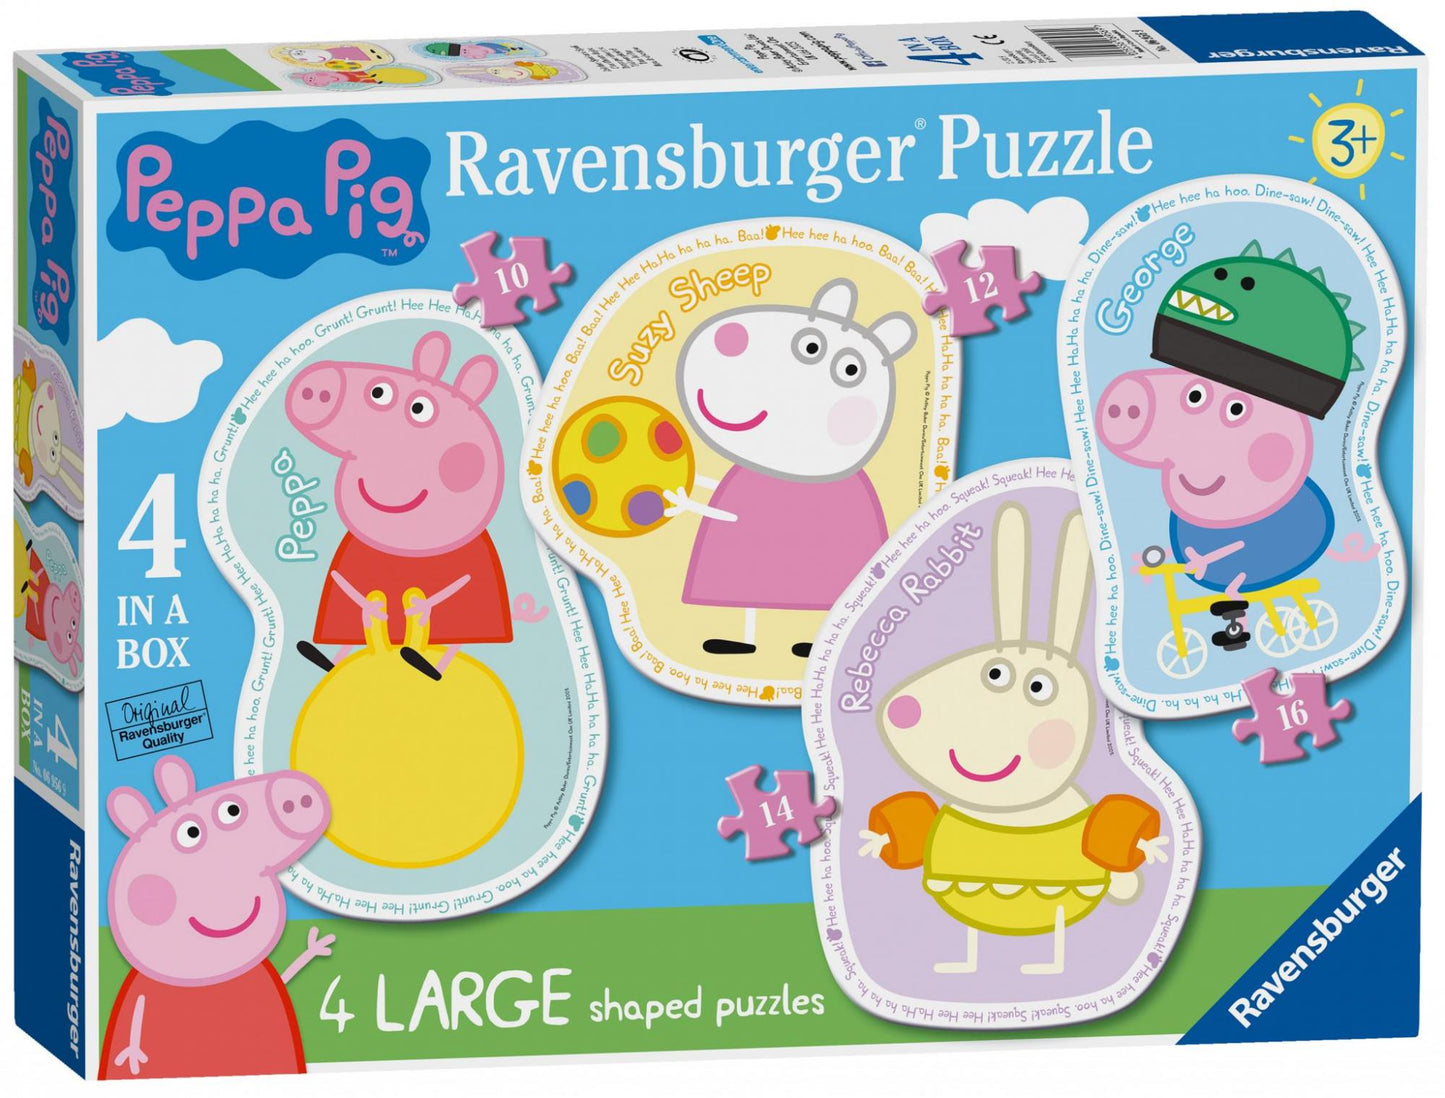 Ravensburger Peppa Pig 4 Large Shaped Jigsaw Puzzles (10,12,14,16pc)